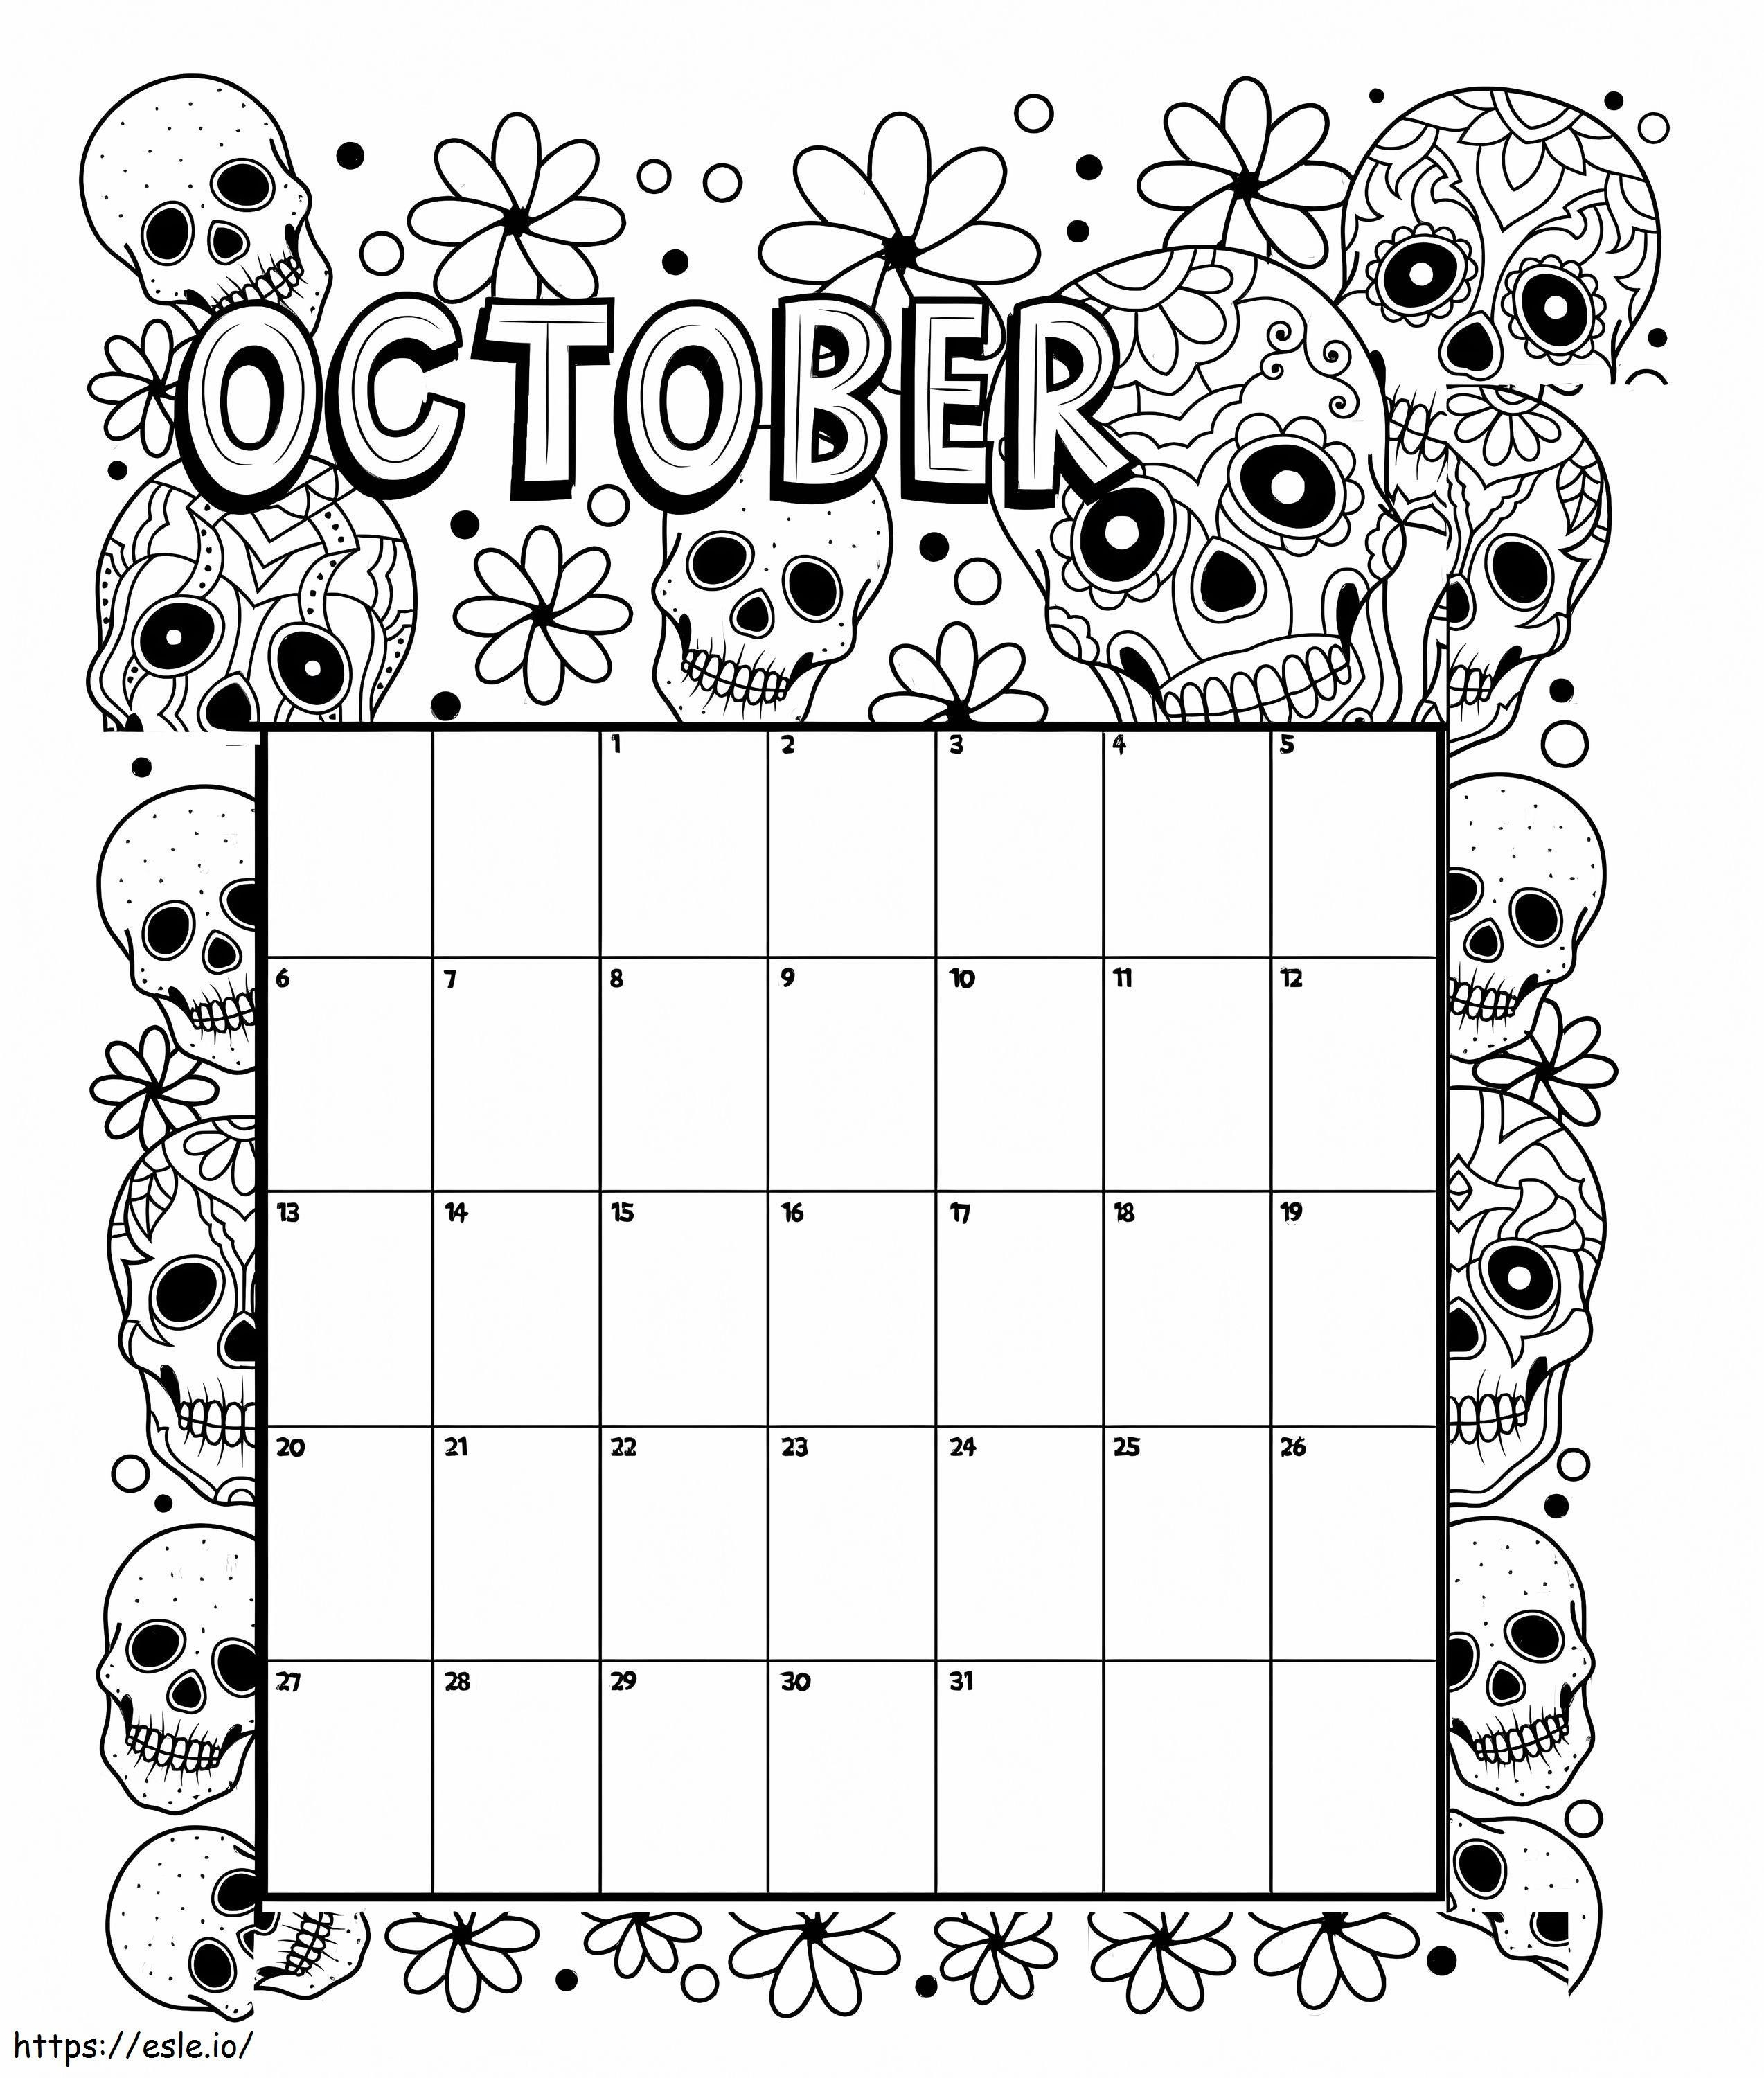 October Halloween Calendar coloring page